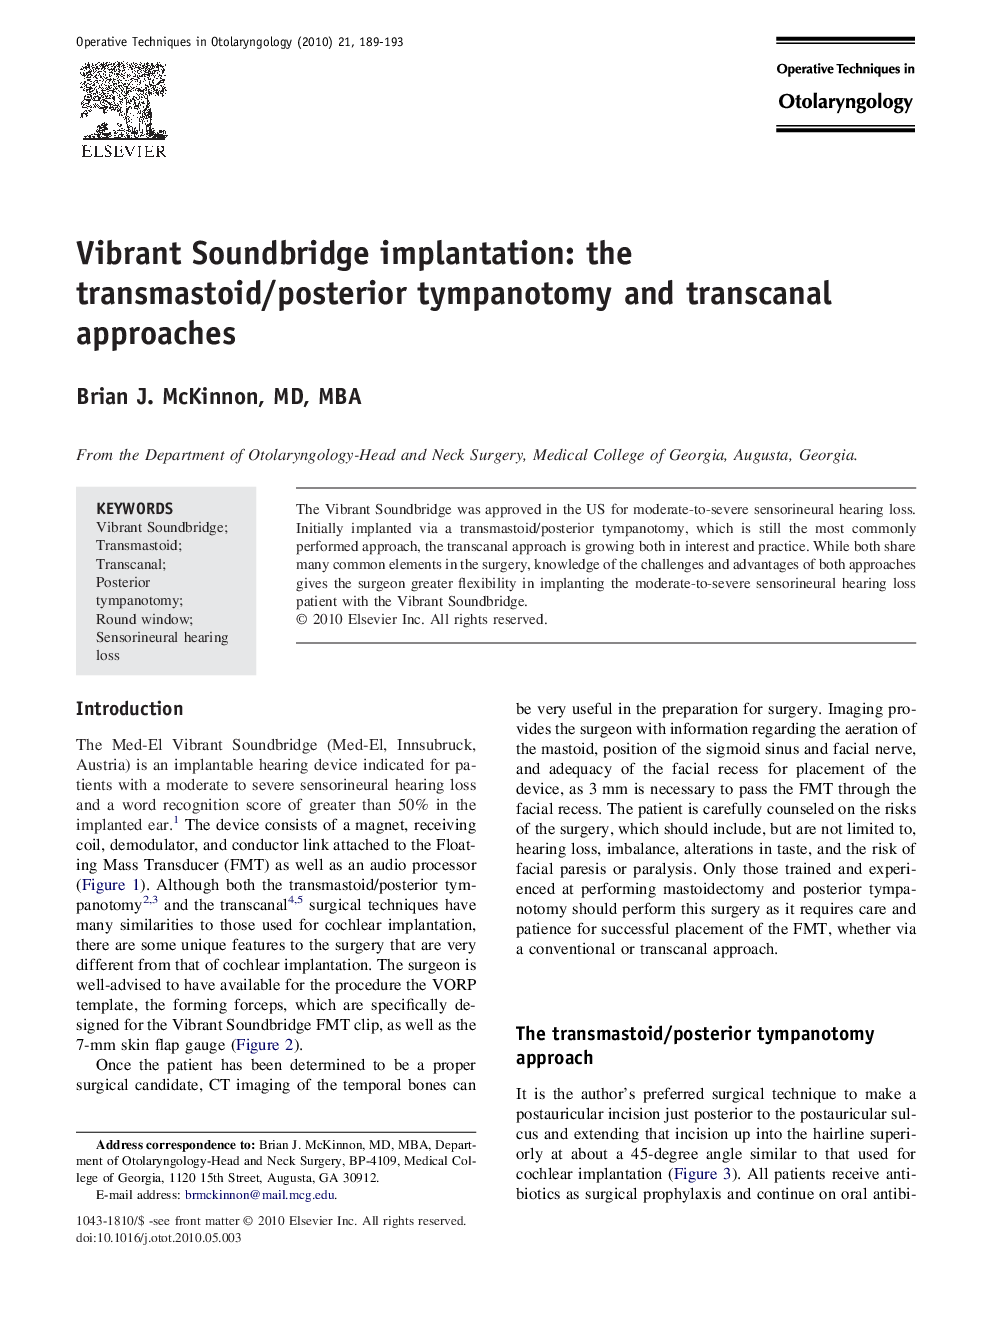 Vibrant Soundbridge implantation: the transmastoid/posterior tympanotomy and transcanal approaches